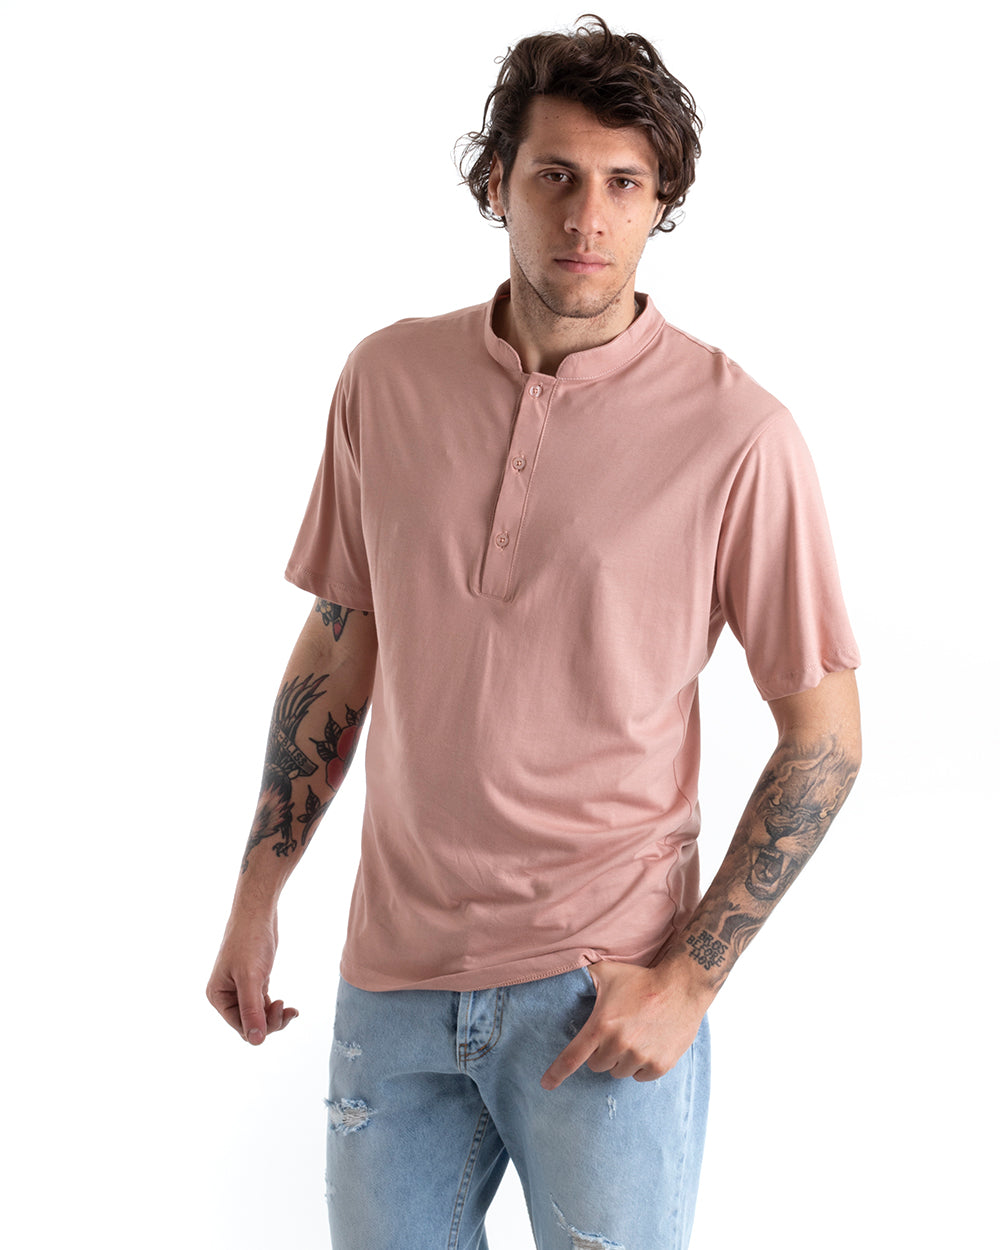 T-shirt Uomo Collo Bottoni Tinta Unita Rosa Manica Corta Basic Casual GIOSAL